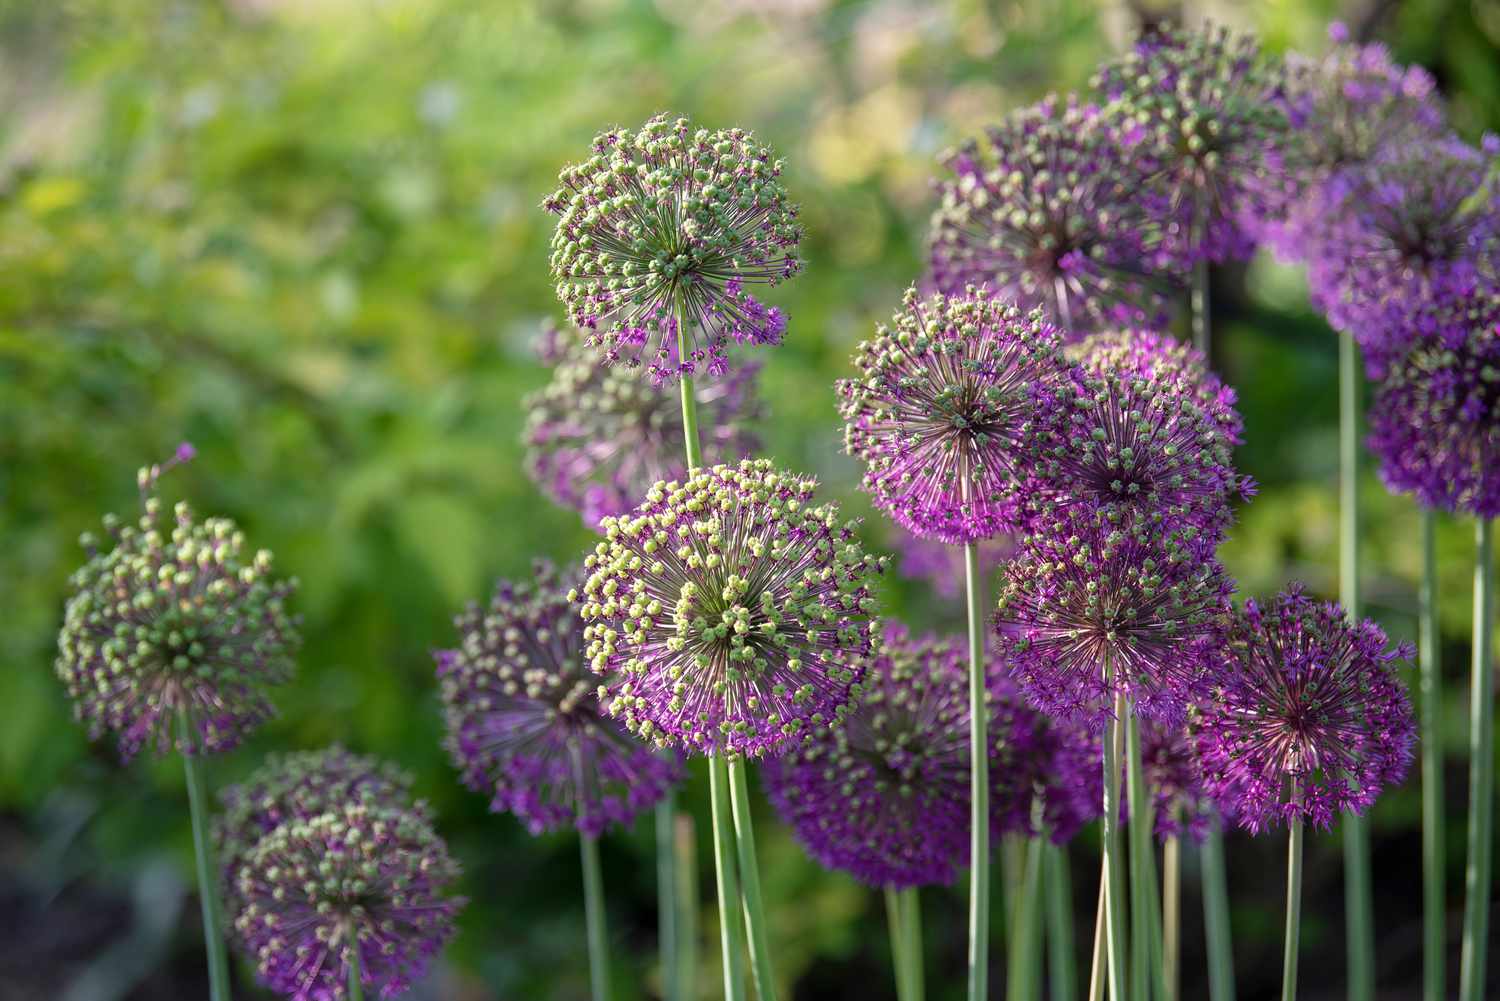 Riesige Zwiebelstaude mit grünen Knospen und violetten sternförmigen Blüten an dünnen Stielen